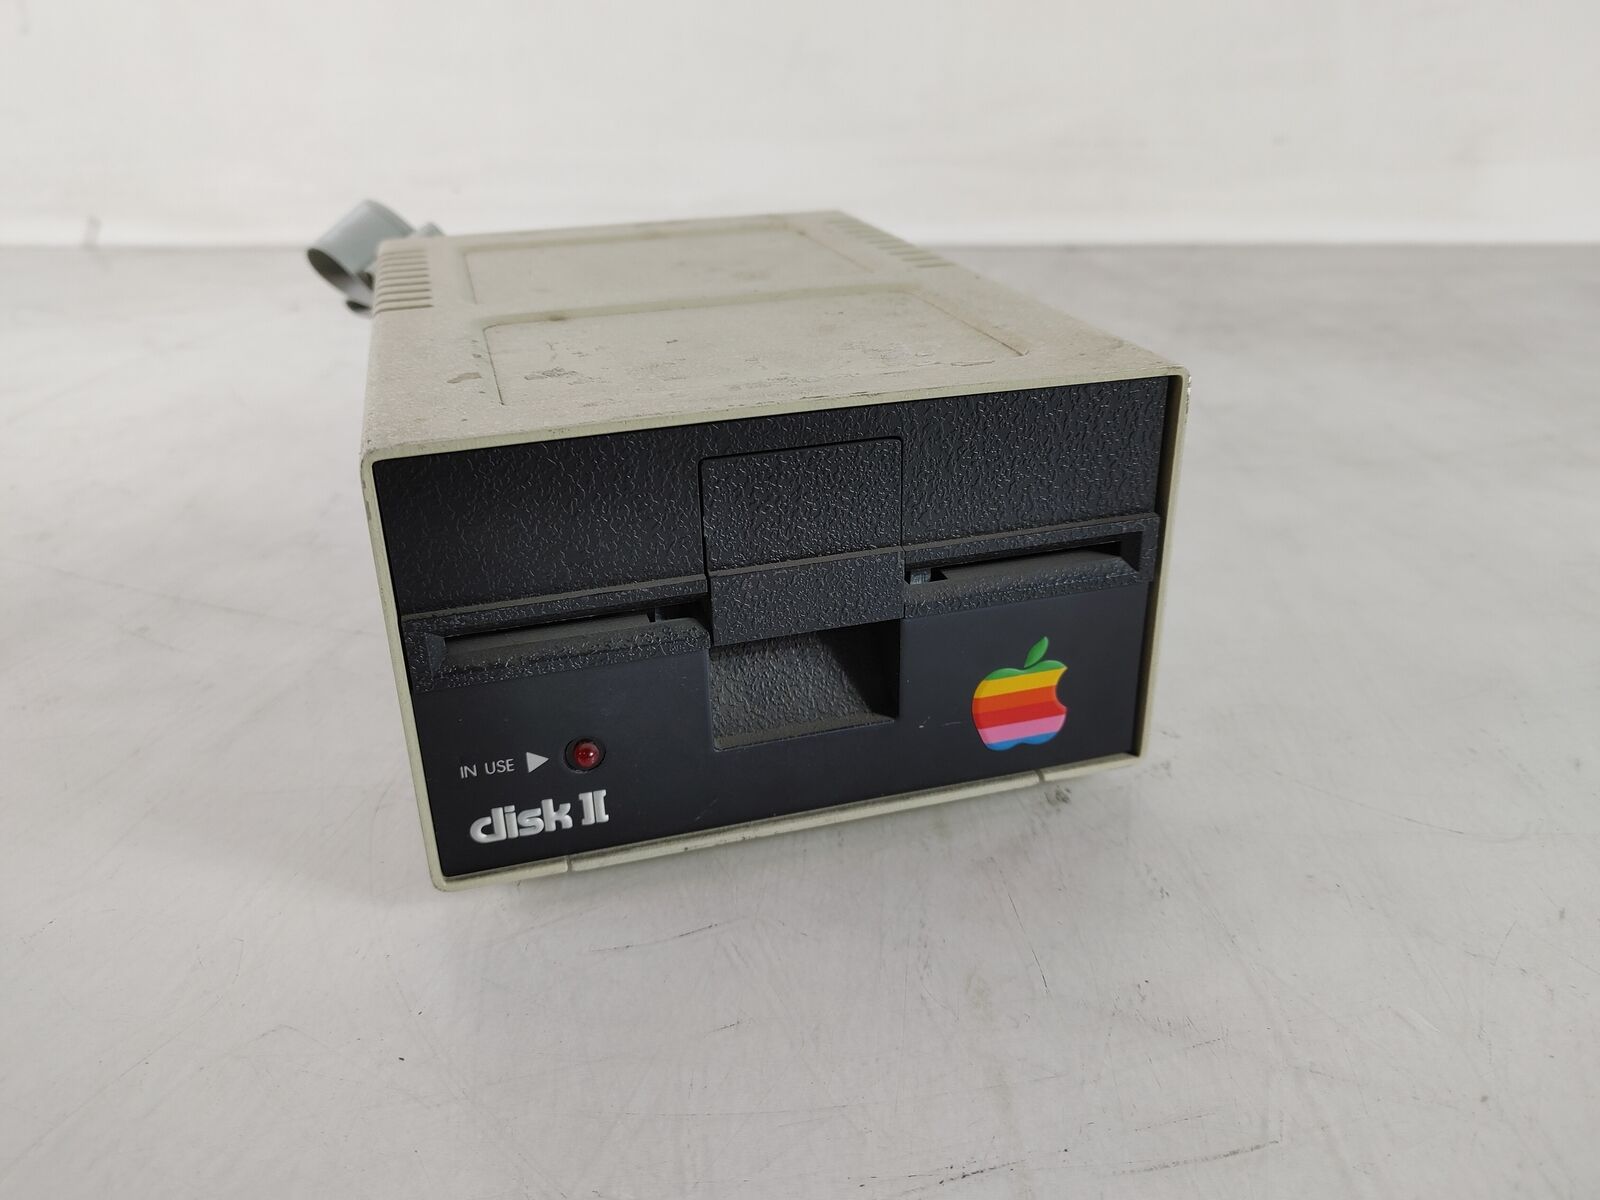 Vintage Apple 825-0109-A A2M0003 Disk II 5.25 Floppy Disk Drive